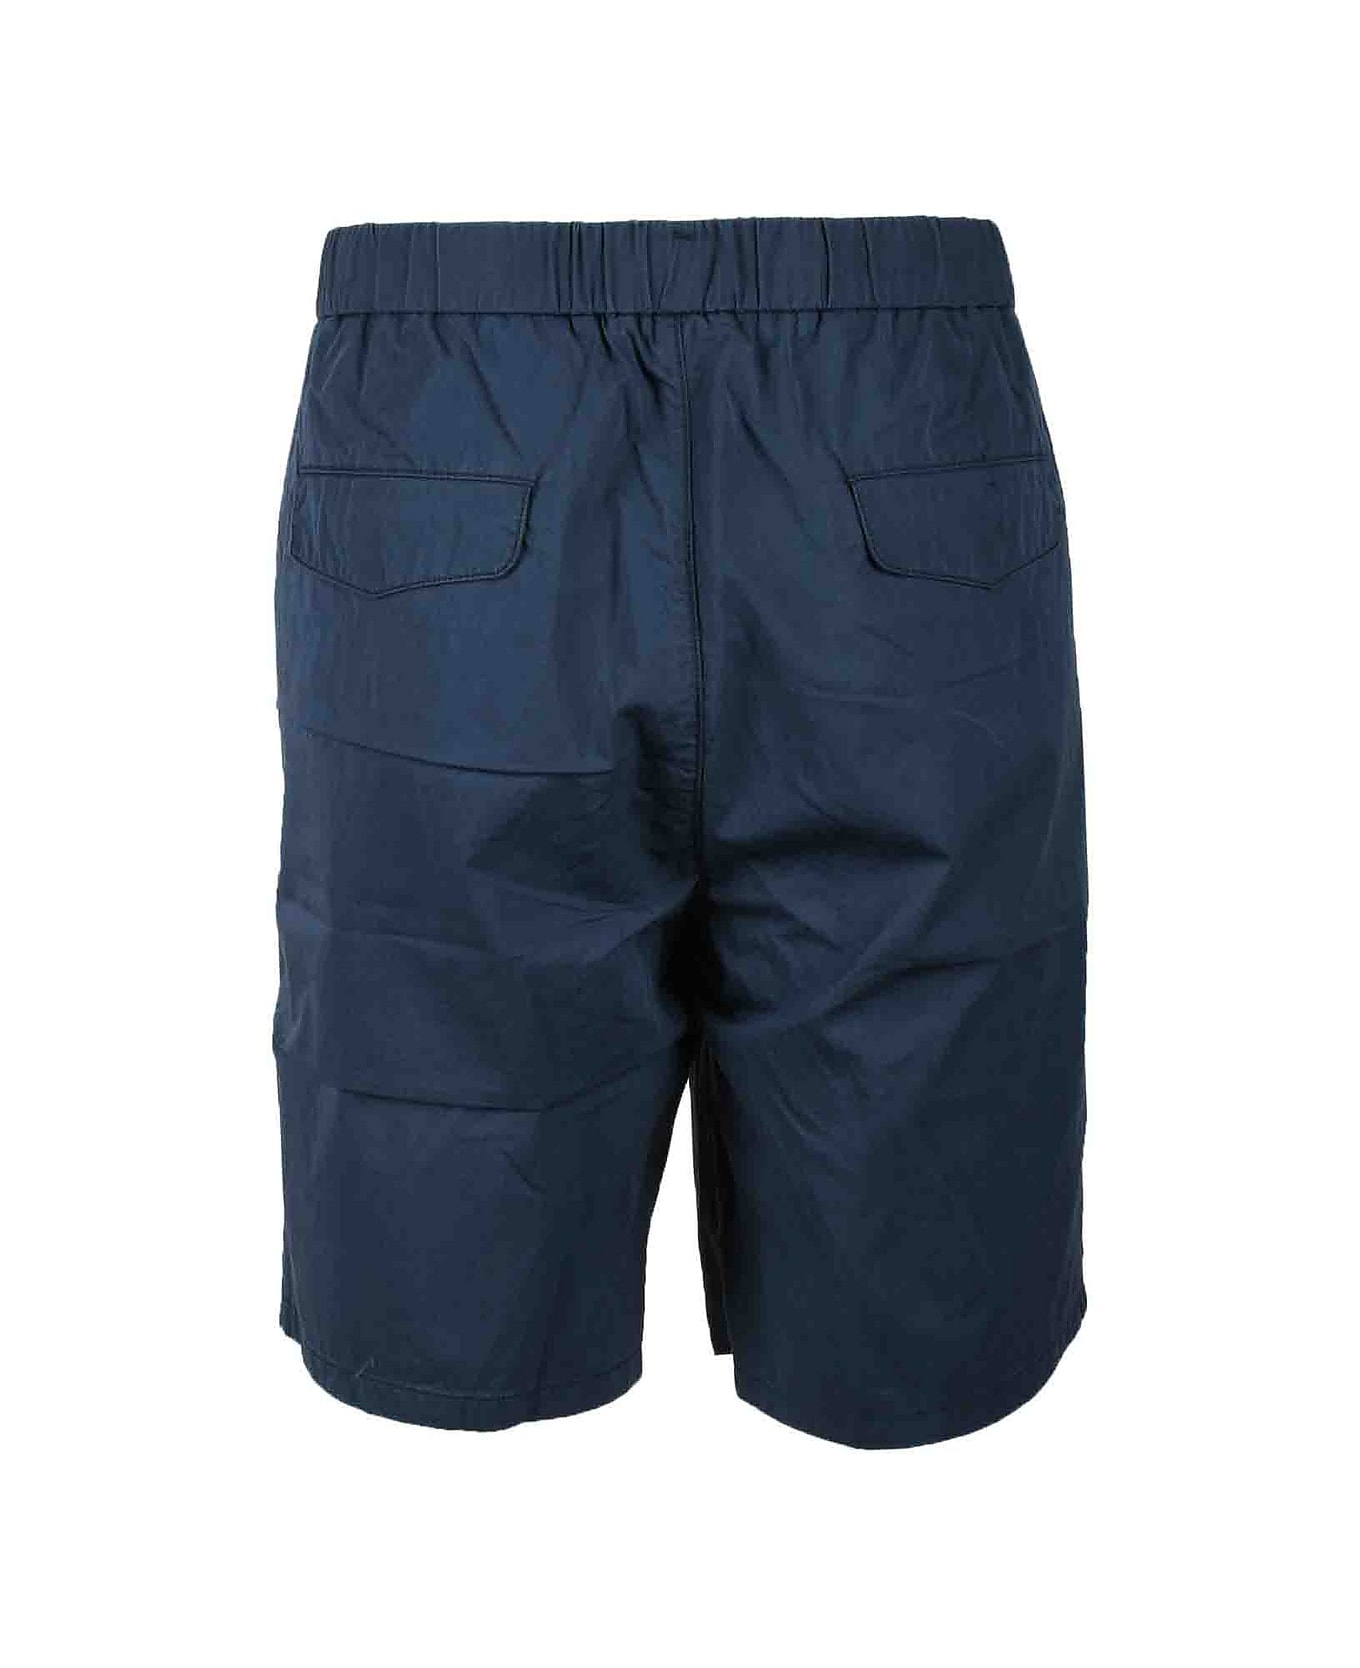 Sun 68 Men's Blue Bermuda Shorts - Blue